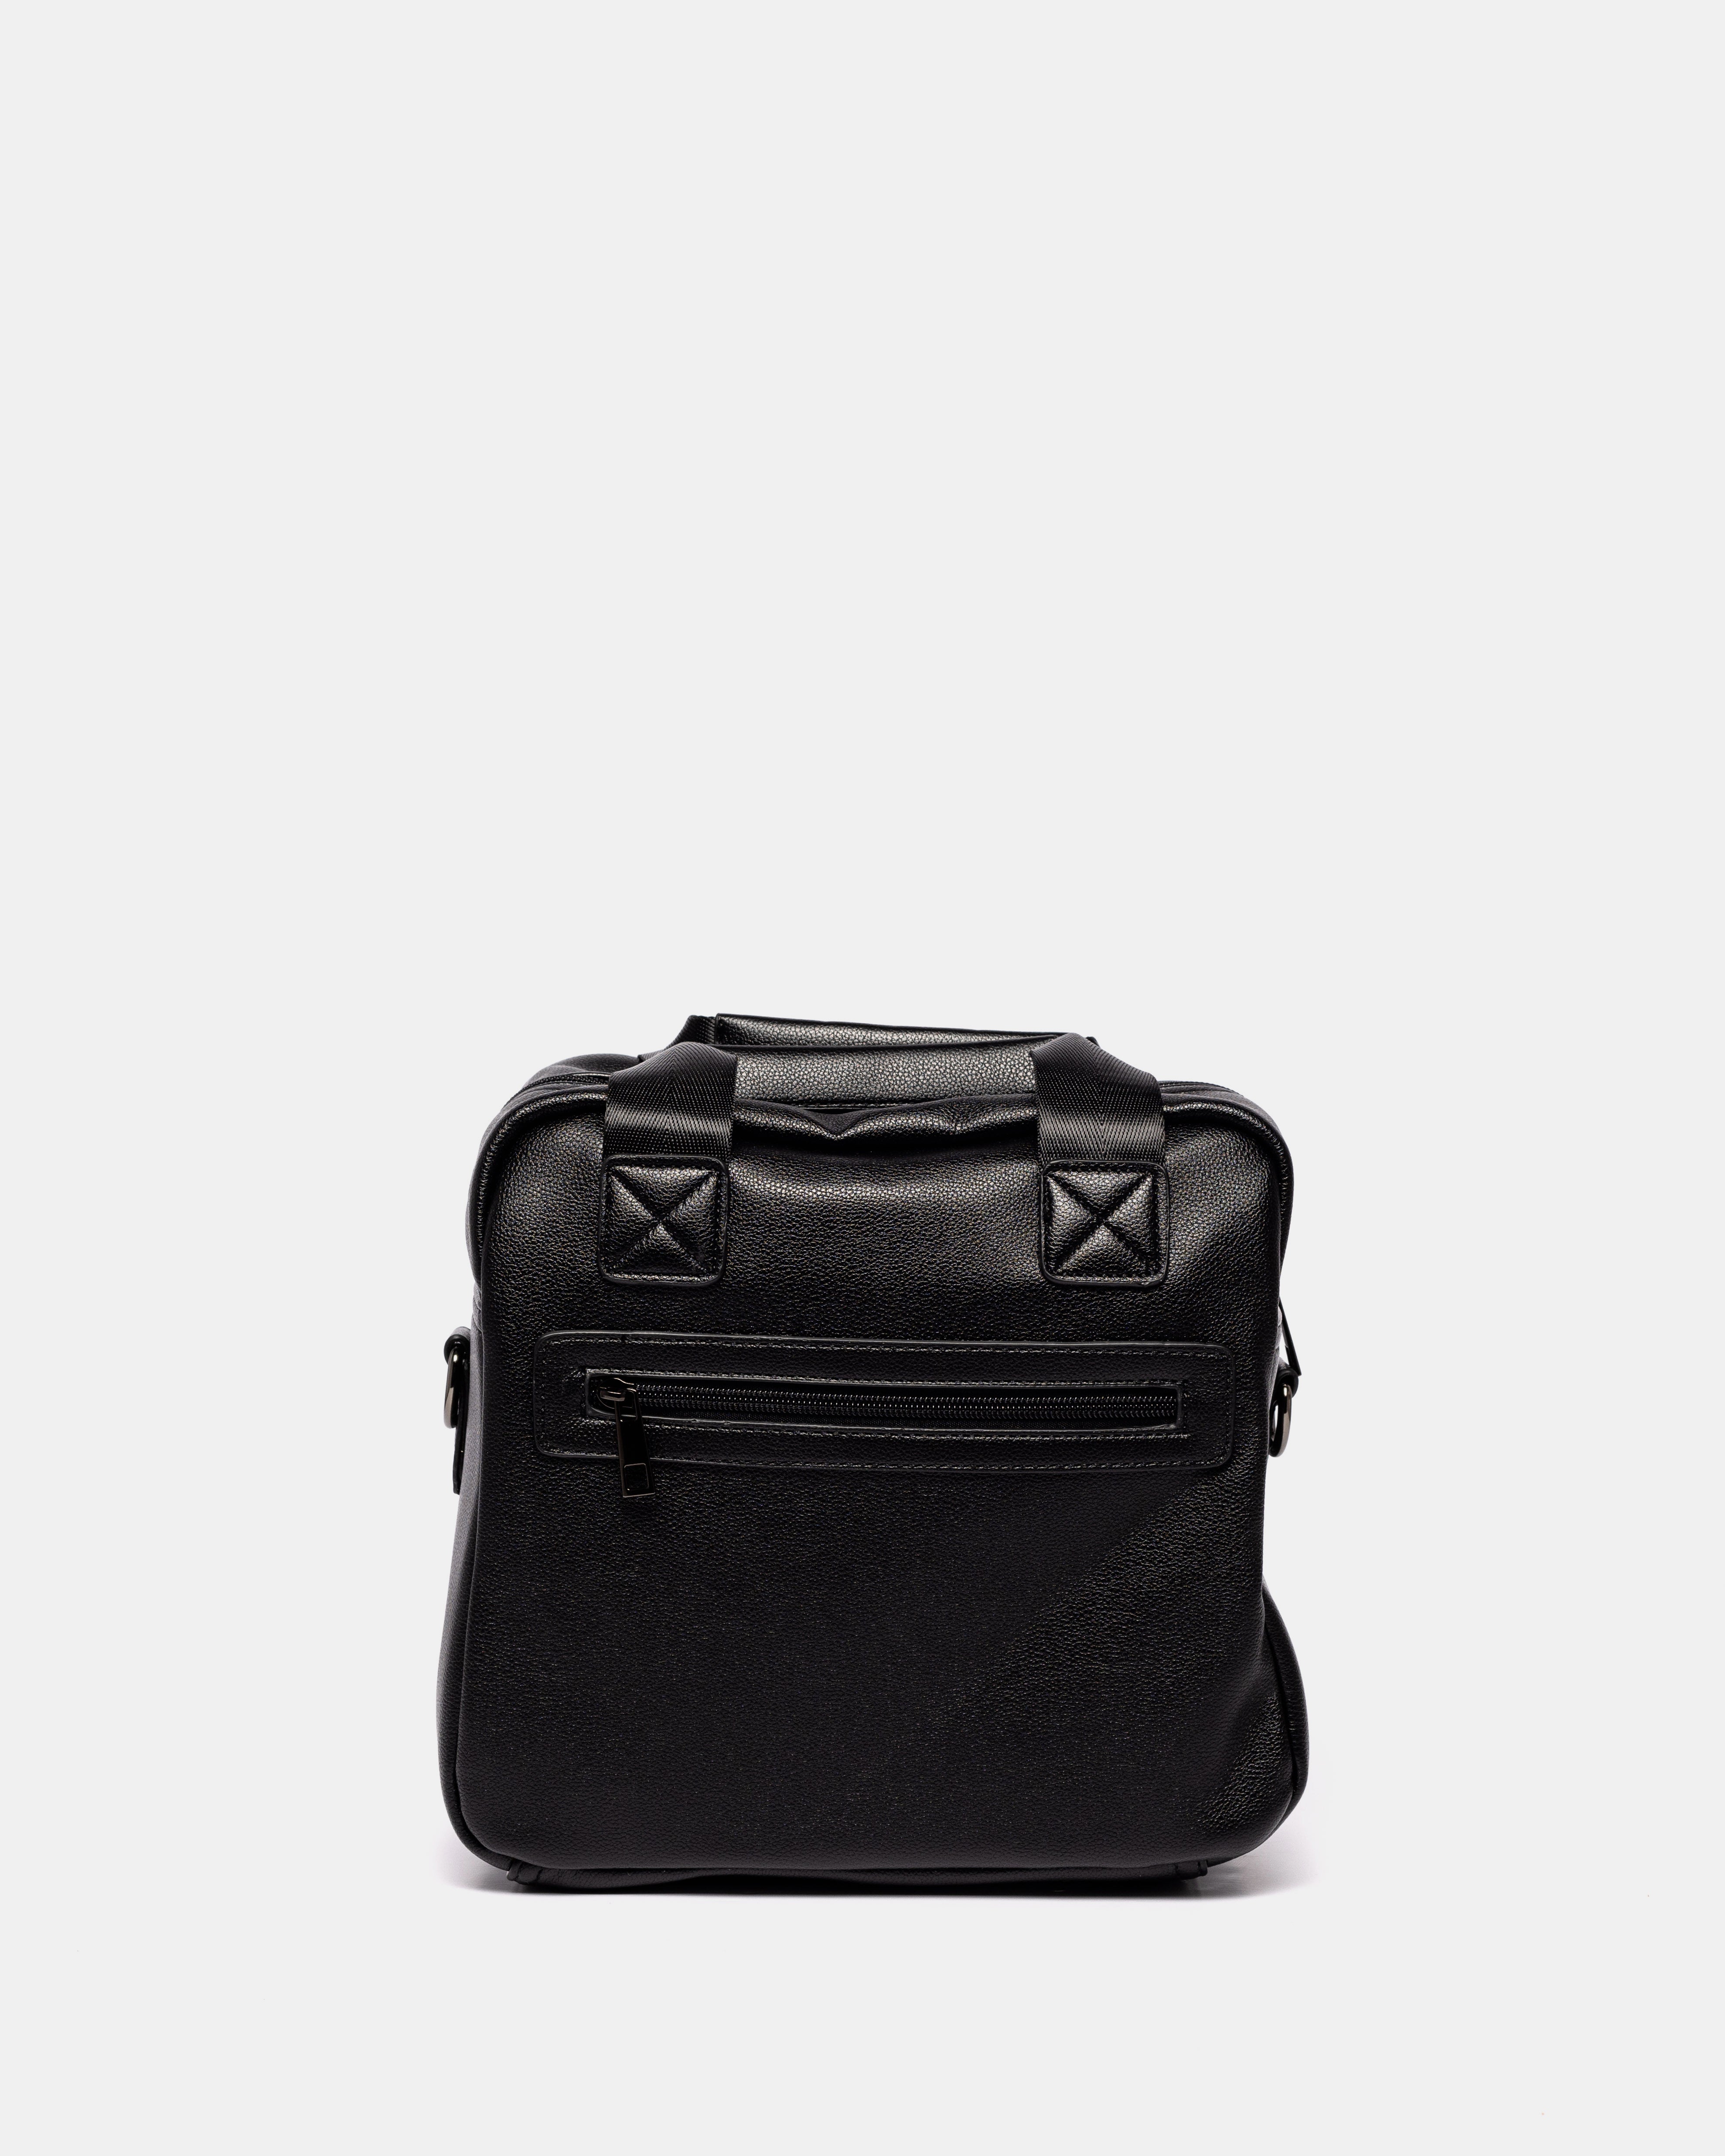 Mero Black Luxury Lunch Bag - T|W Tote